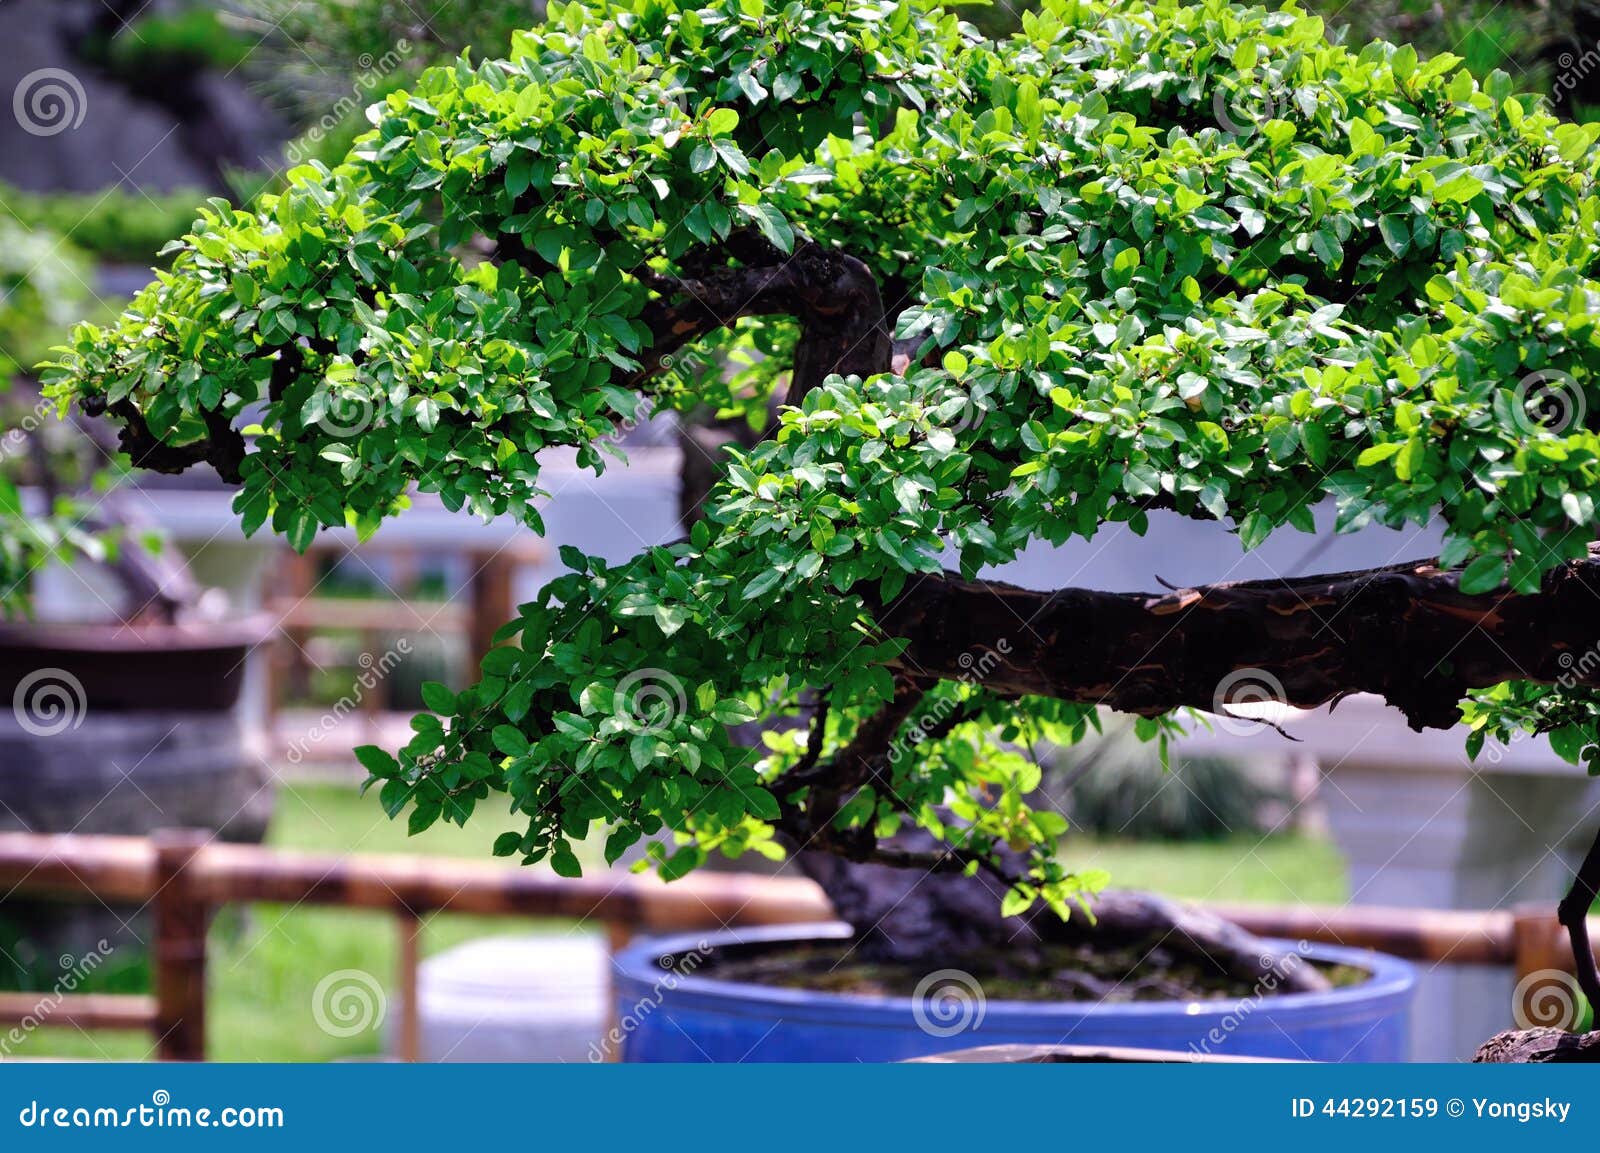 Lingering Garden bonsai stock image. Image of bonsai - 44292159